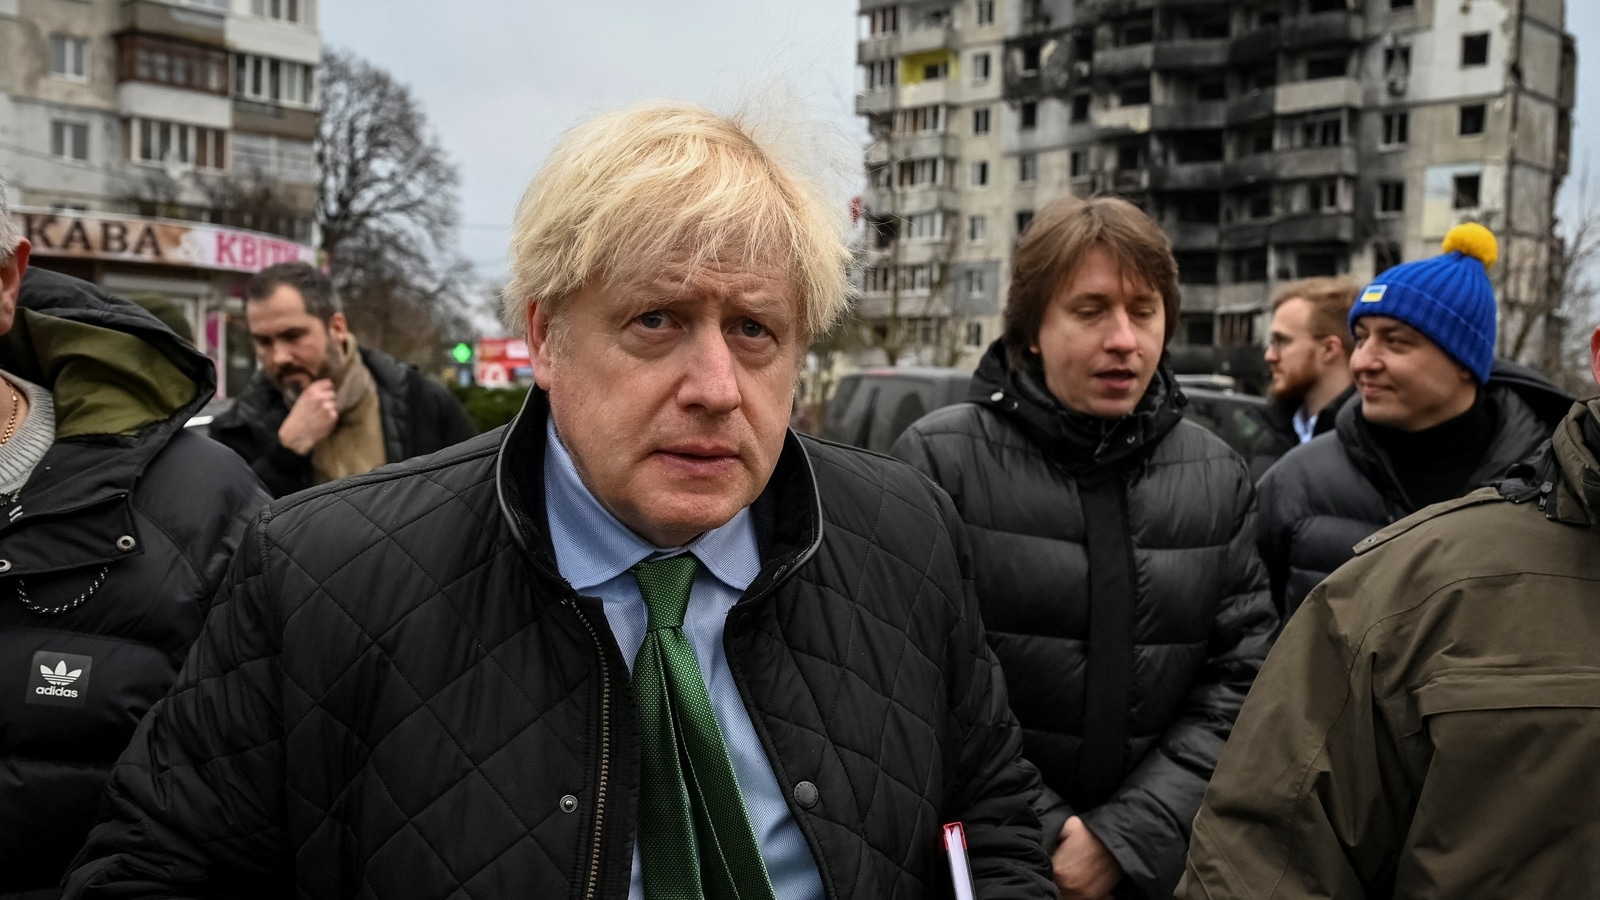 Putin threatened to lob missile at me: Boris Johnson in BBC documentary